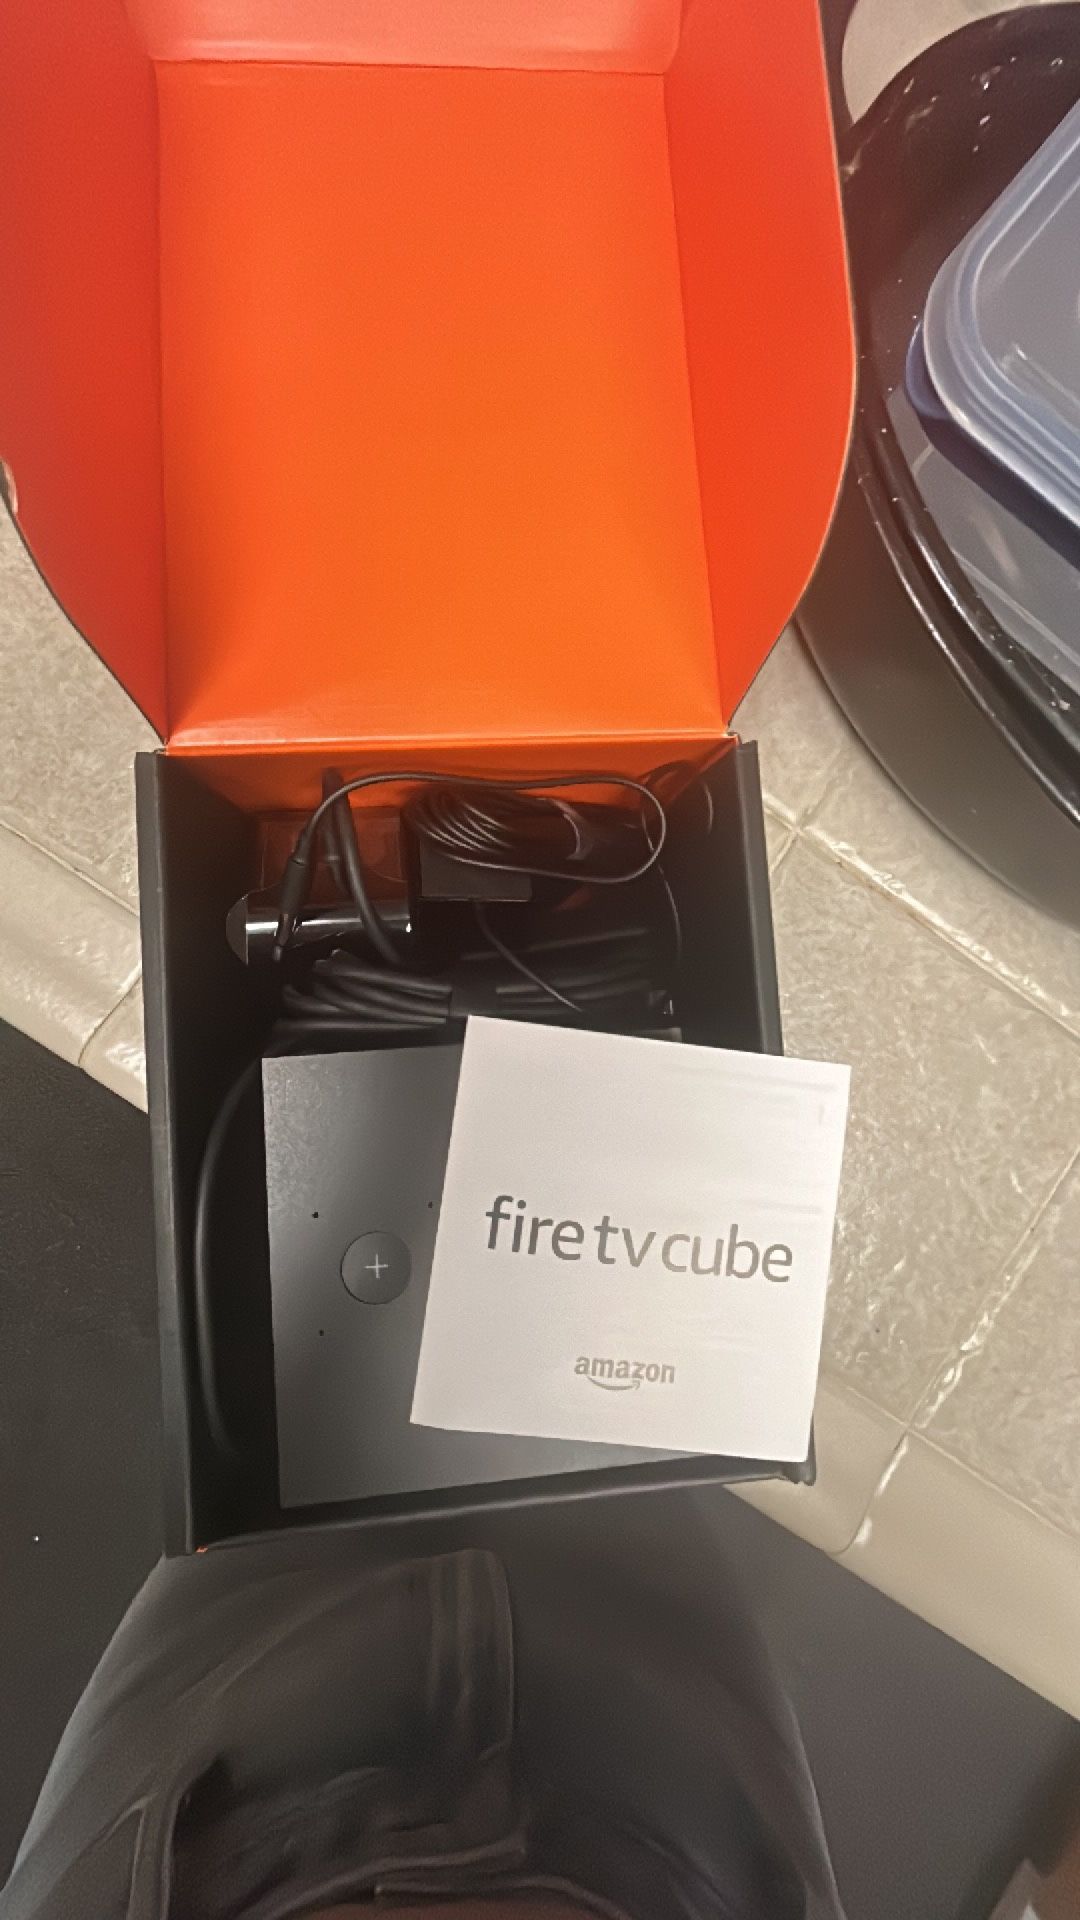 Amazon’s Fire Tv Cube